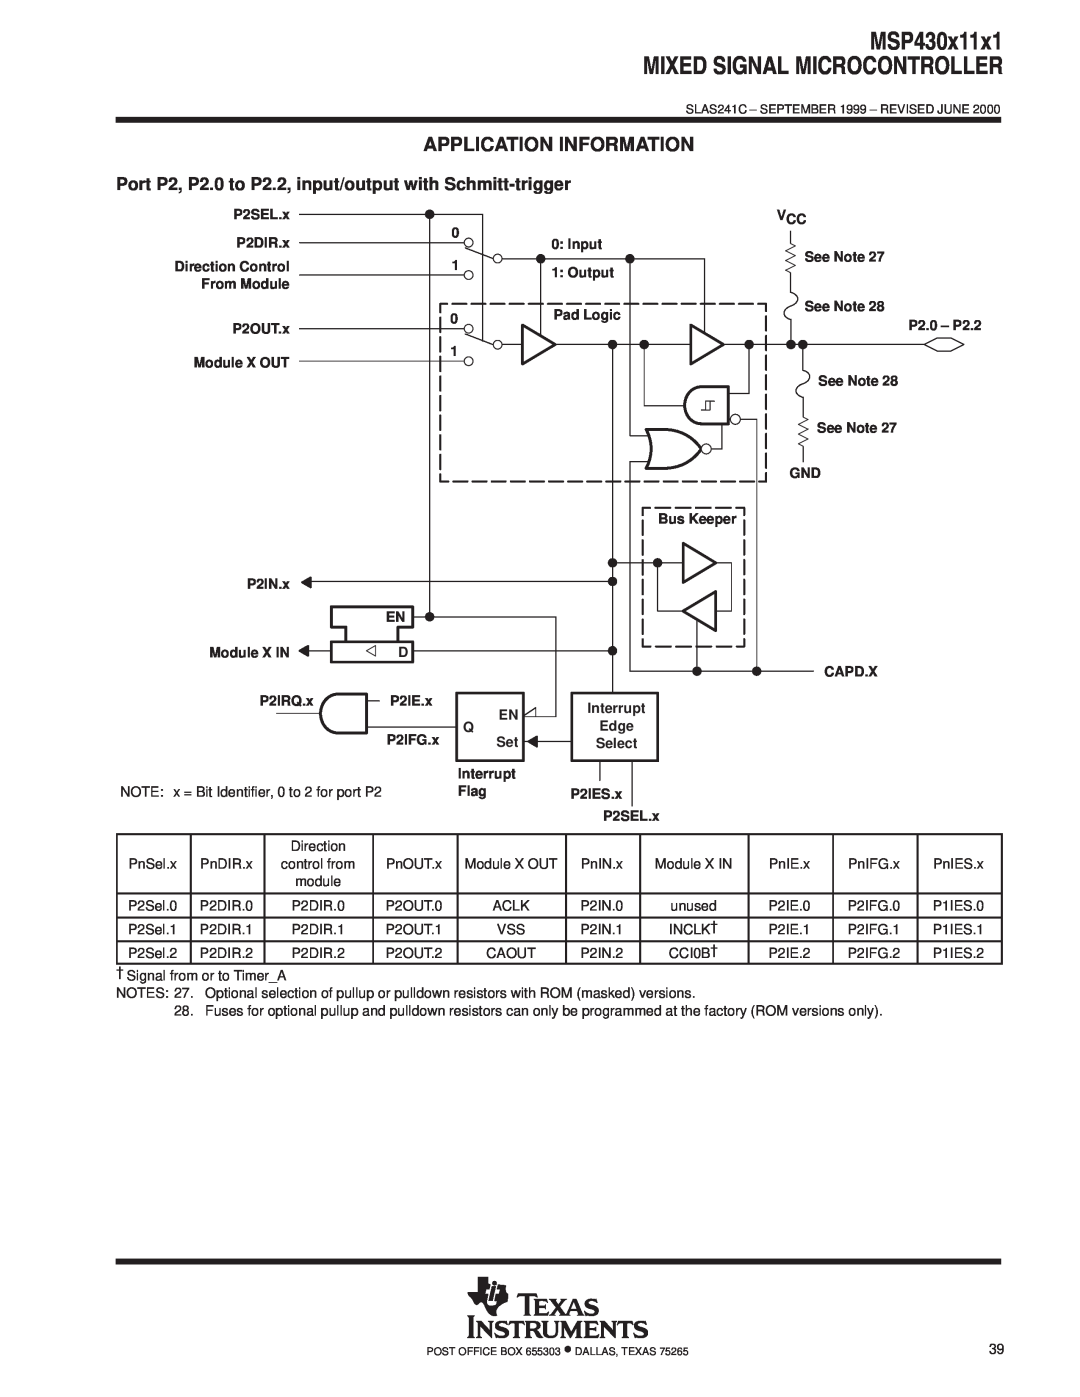 Texas Instruments MSP430x11x1 Port P2, P2.0 to P2.2, input/output with Schmitt-trigger, Mixed Signal Microcontroller 